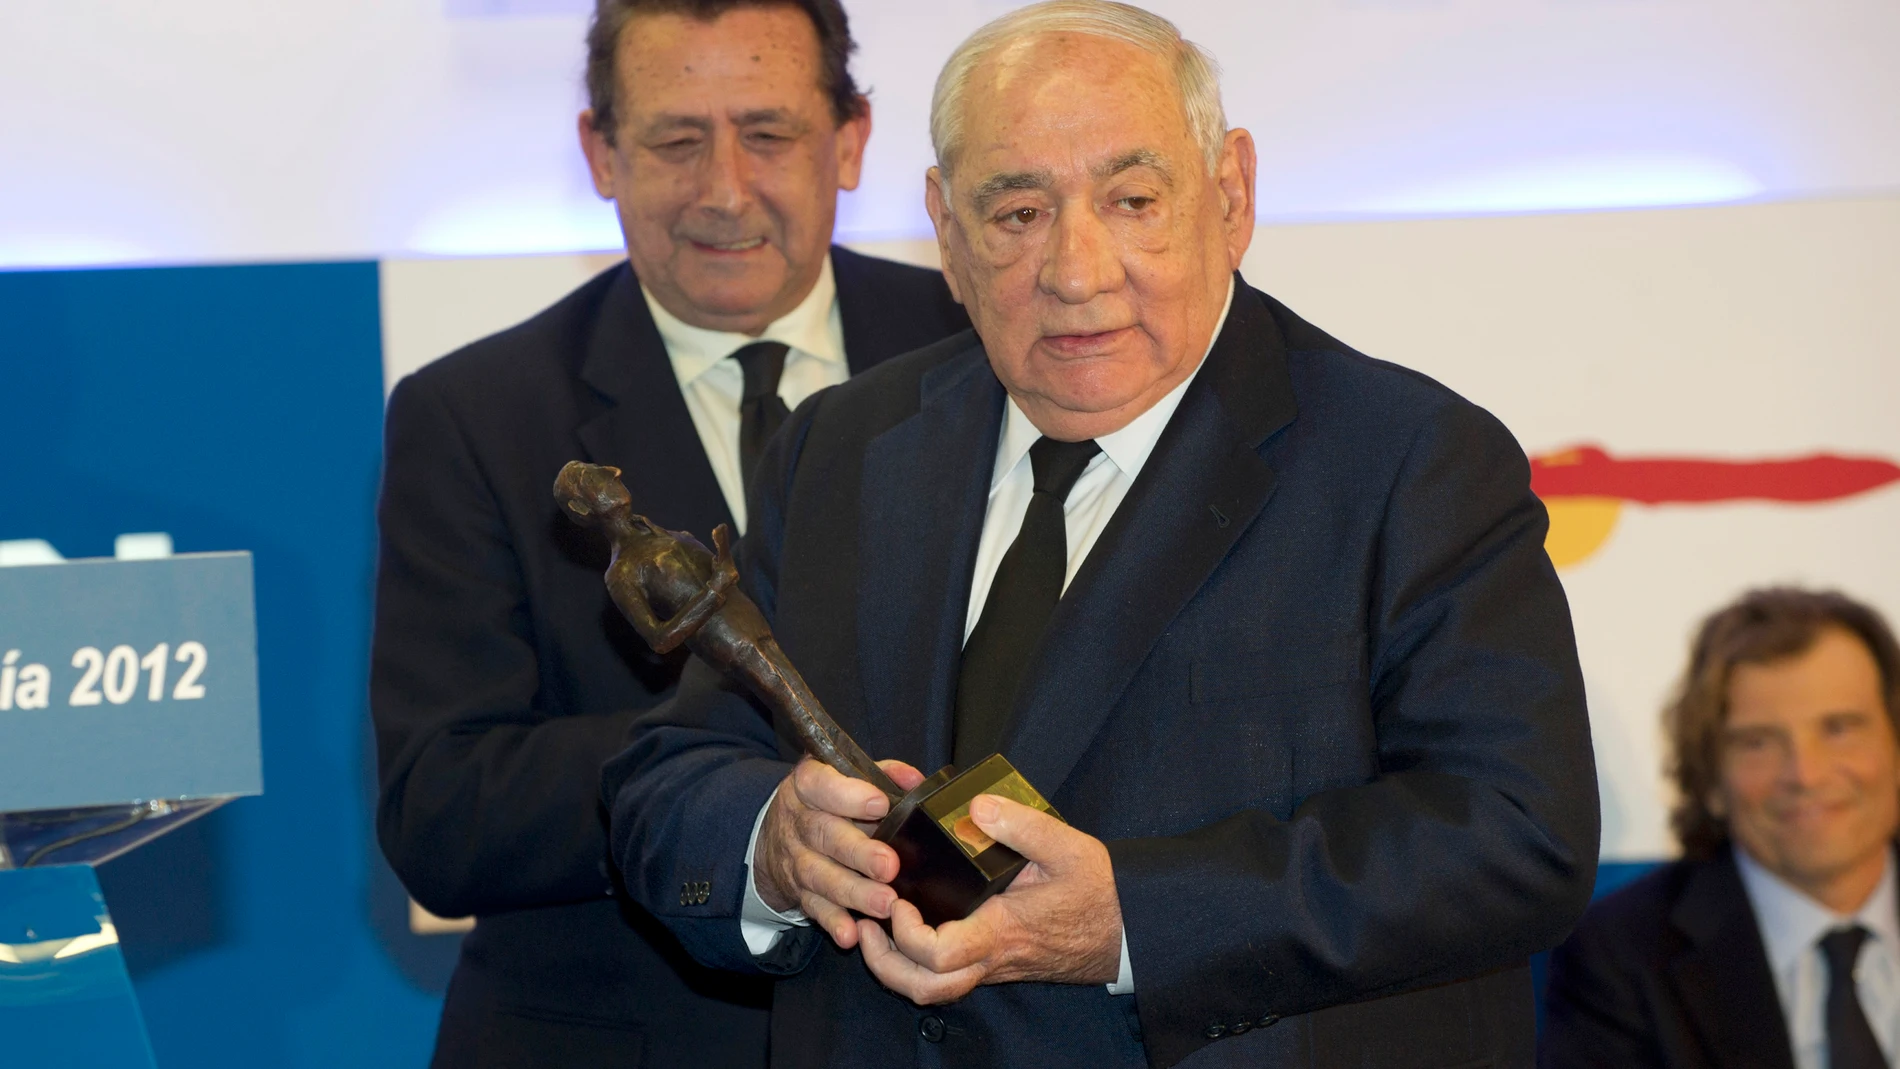 Isidoro Álvarez recogiendo un premio